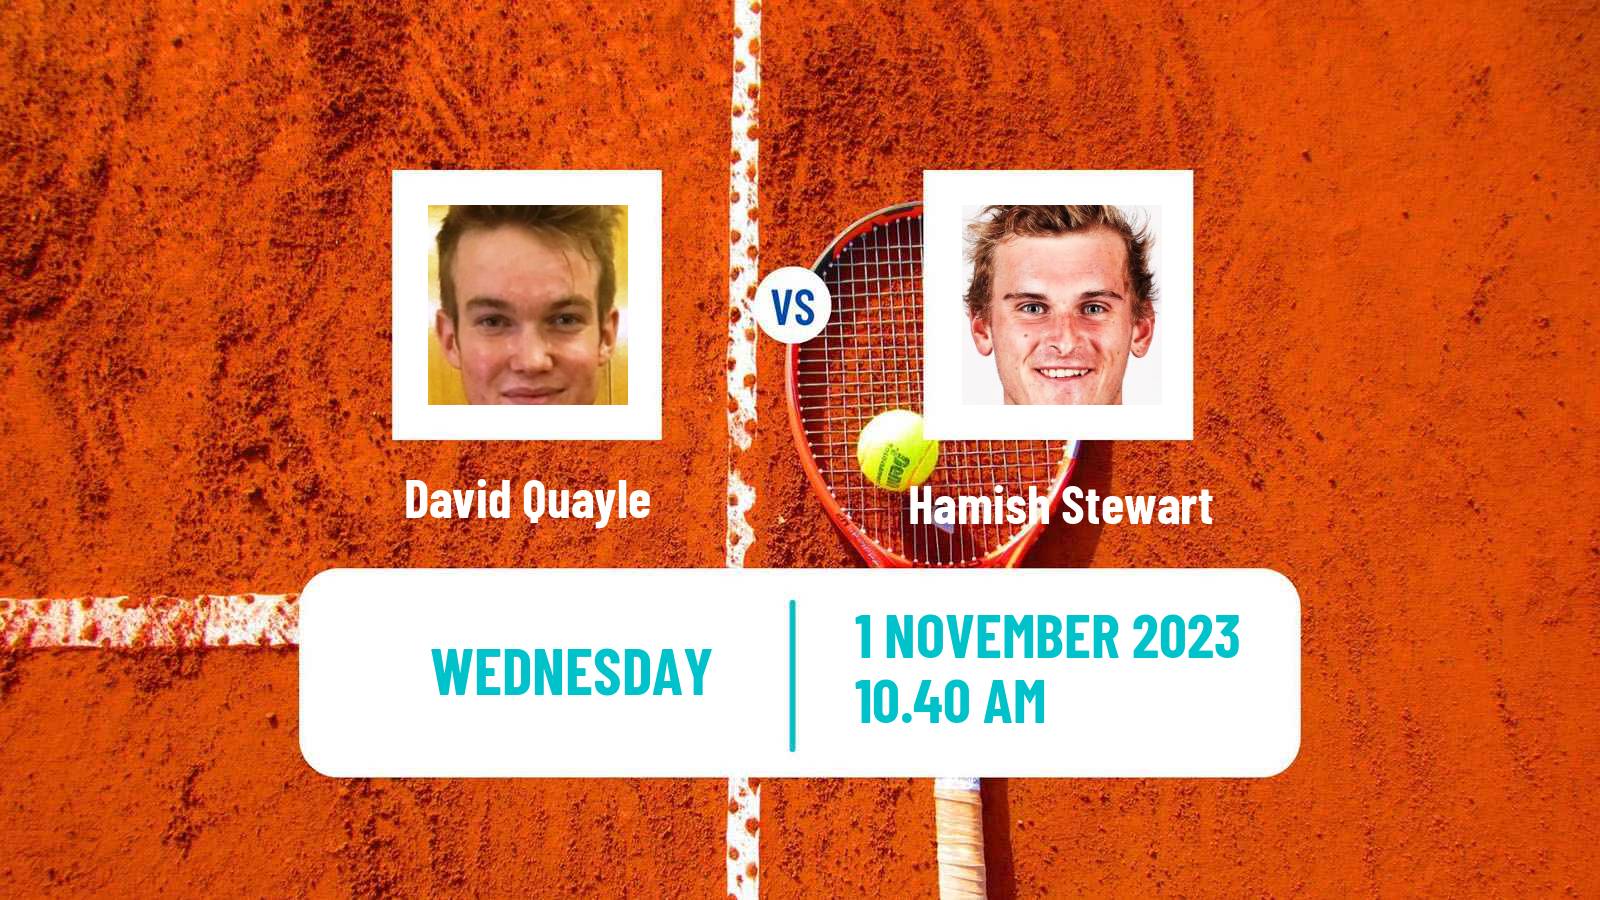 Tennis ITF M25 Sunderland 2 Men David Quayle - Hamish Stewart